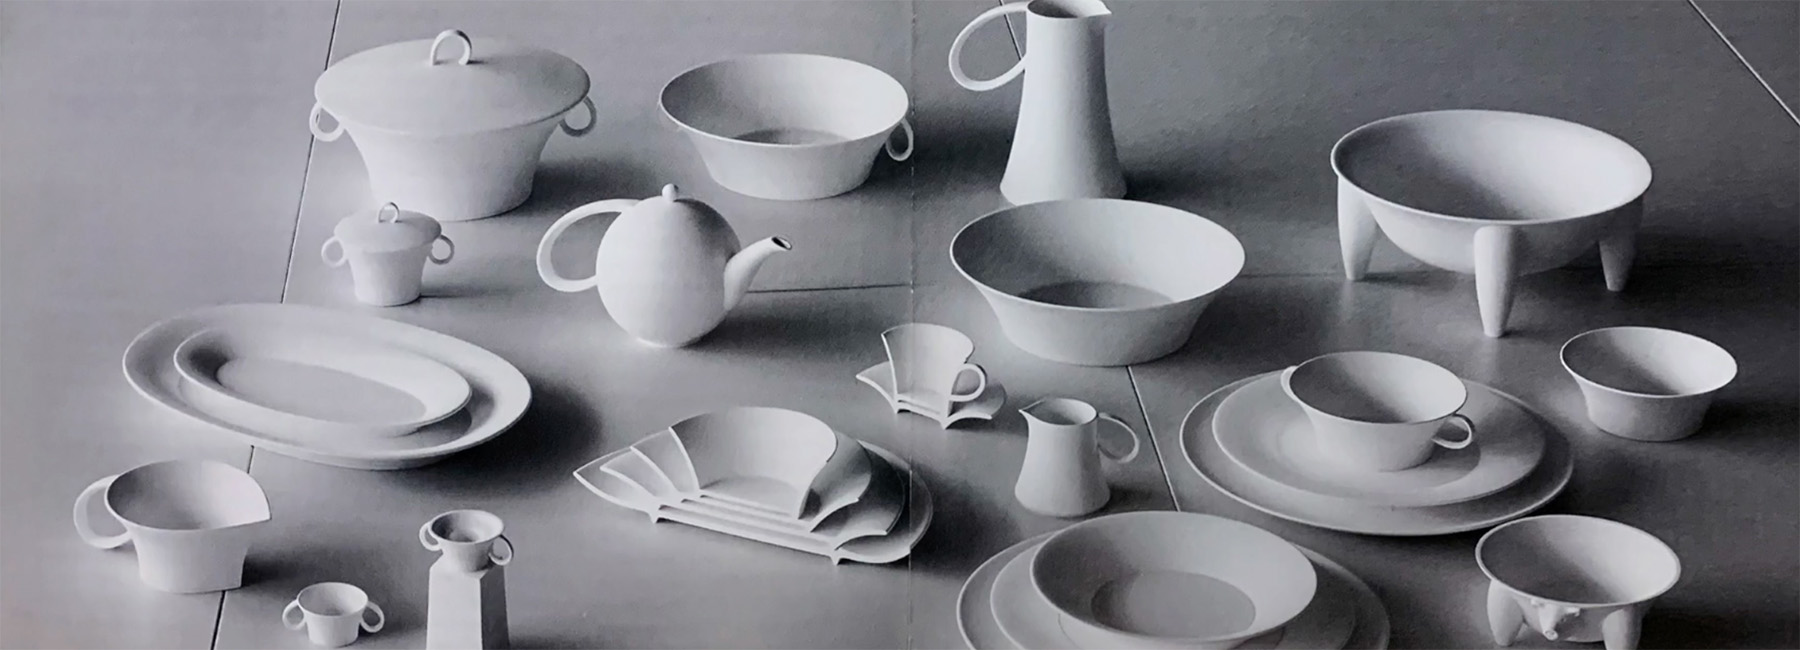 enzo mari design history: berlin service for KPM royal porcelain manufactory